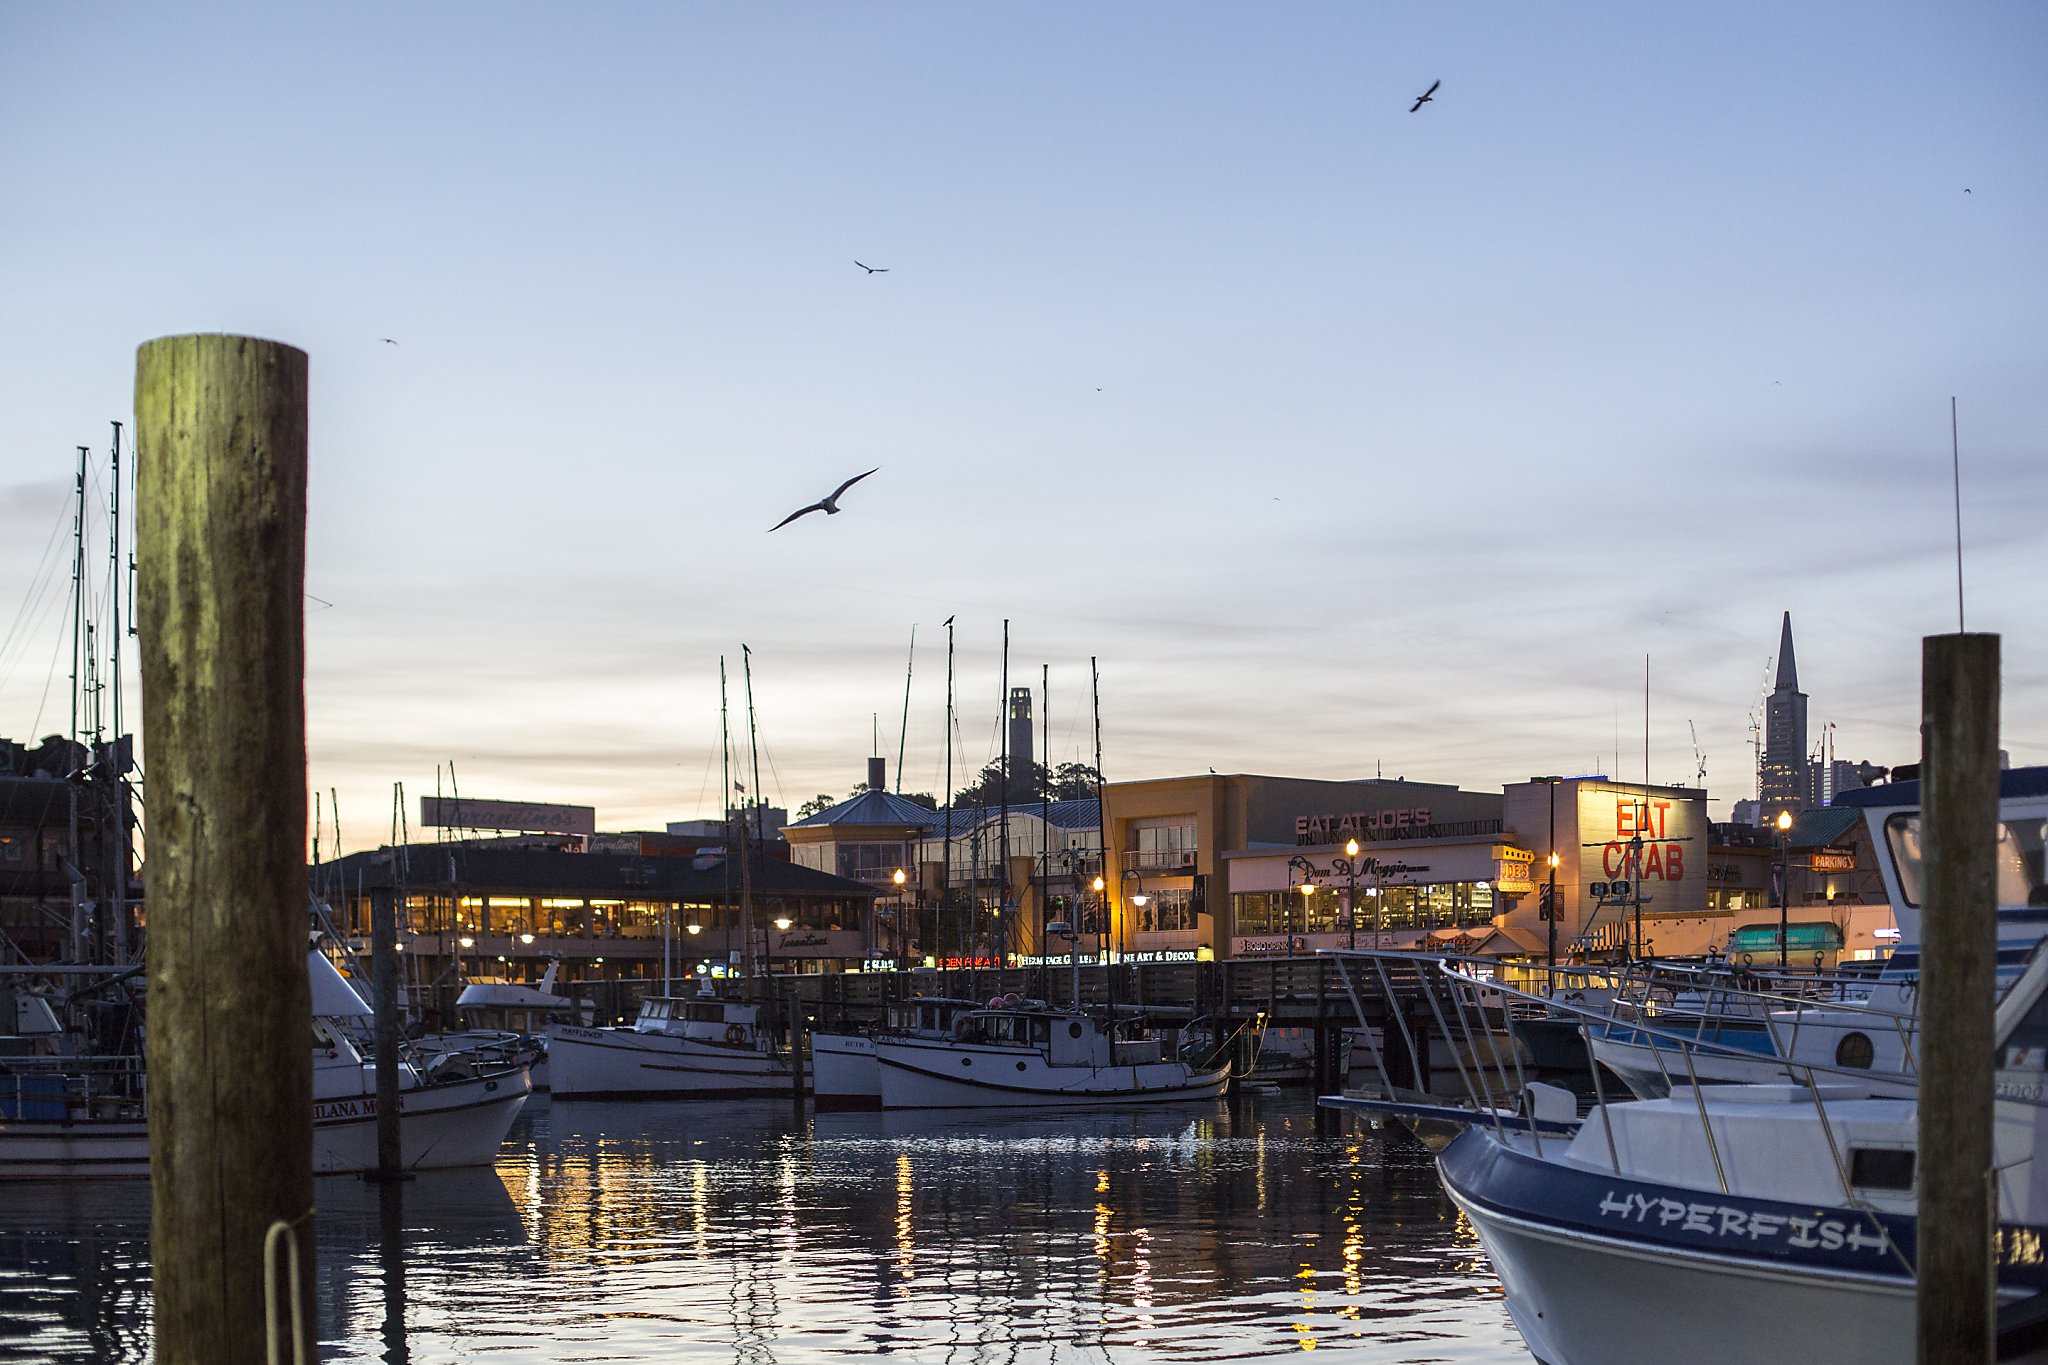 Visit Fisherman's Wharf: 2024 Fisherman's Wharf, San Francisco